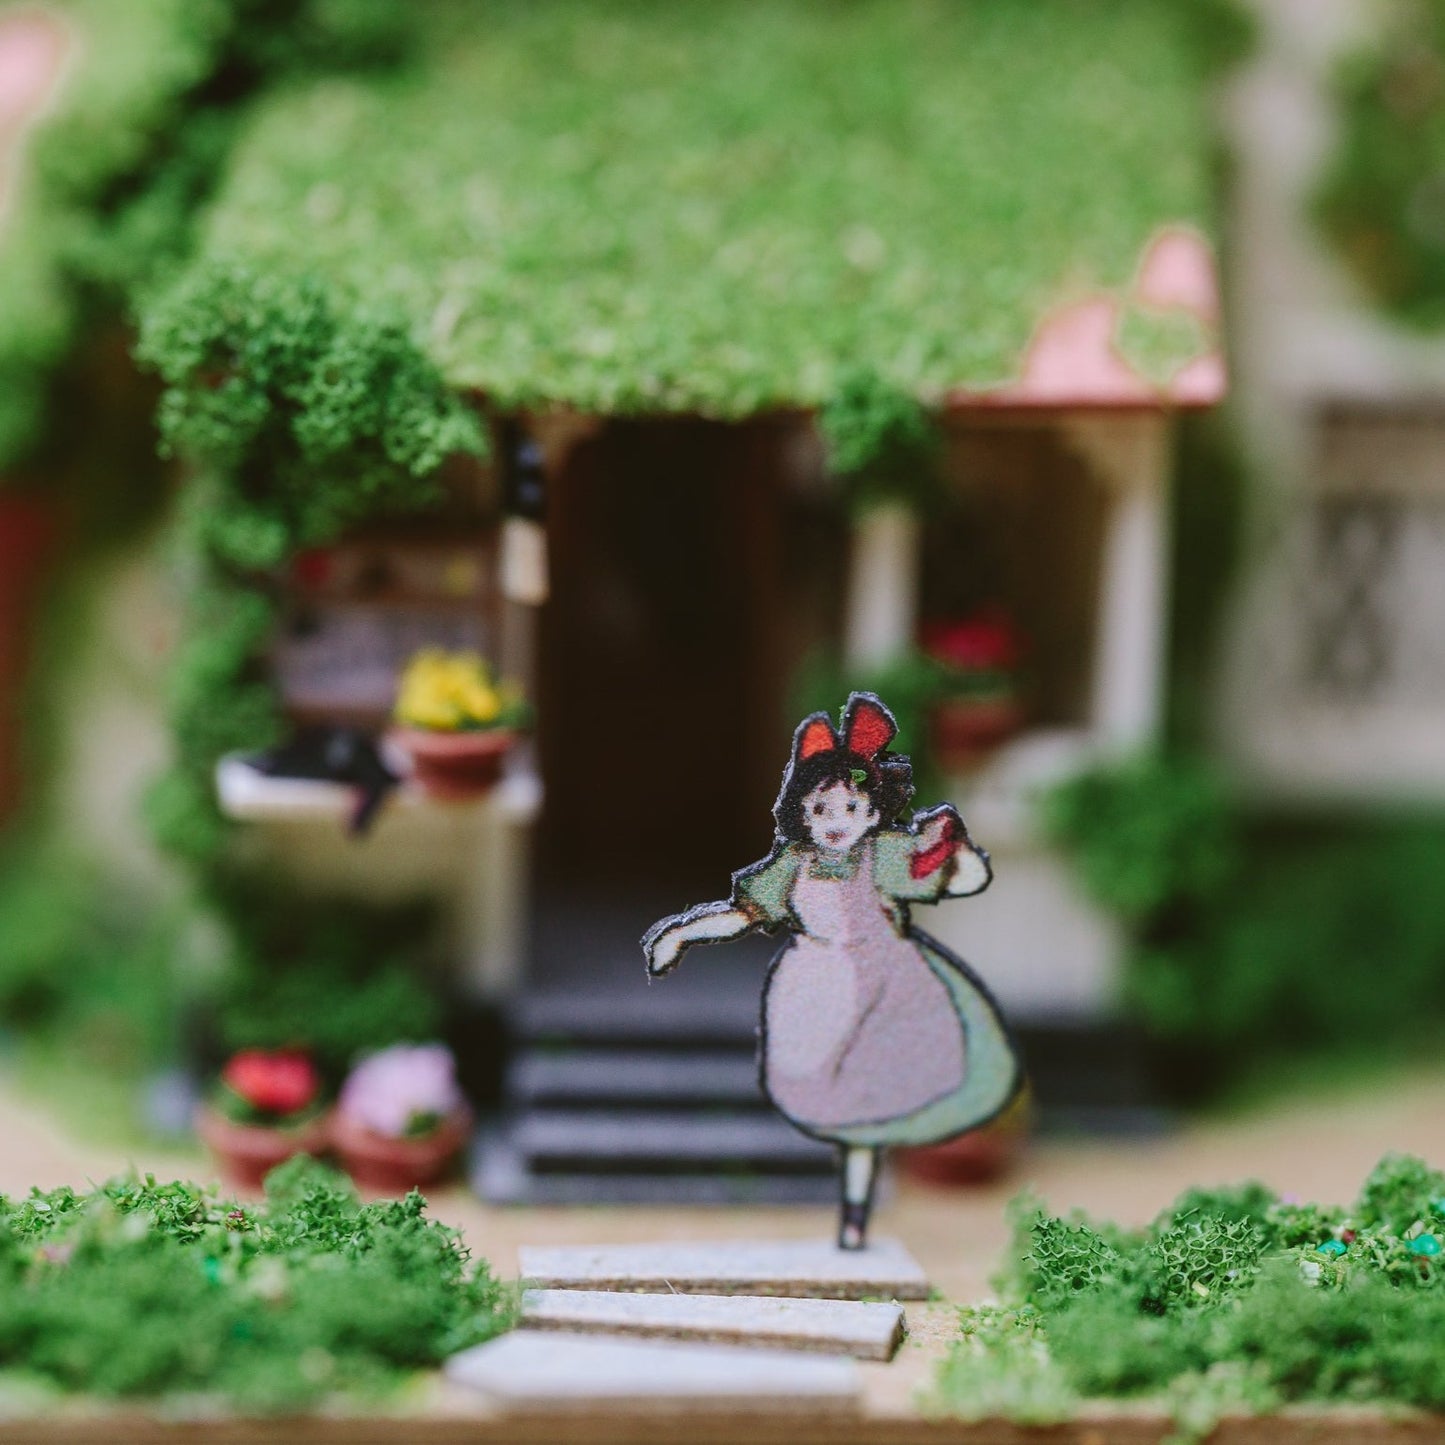 Ghibli Miniatuart | Kiki's Delivery Service : Okino's House (Large)